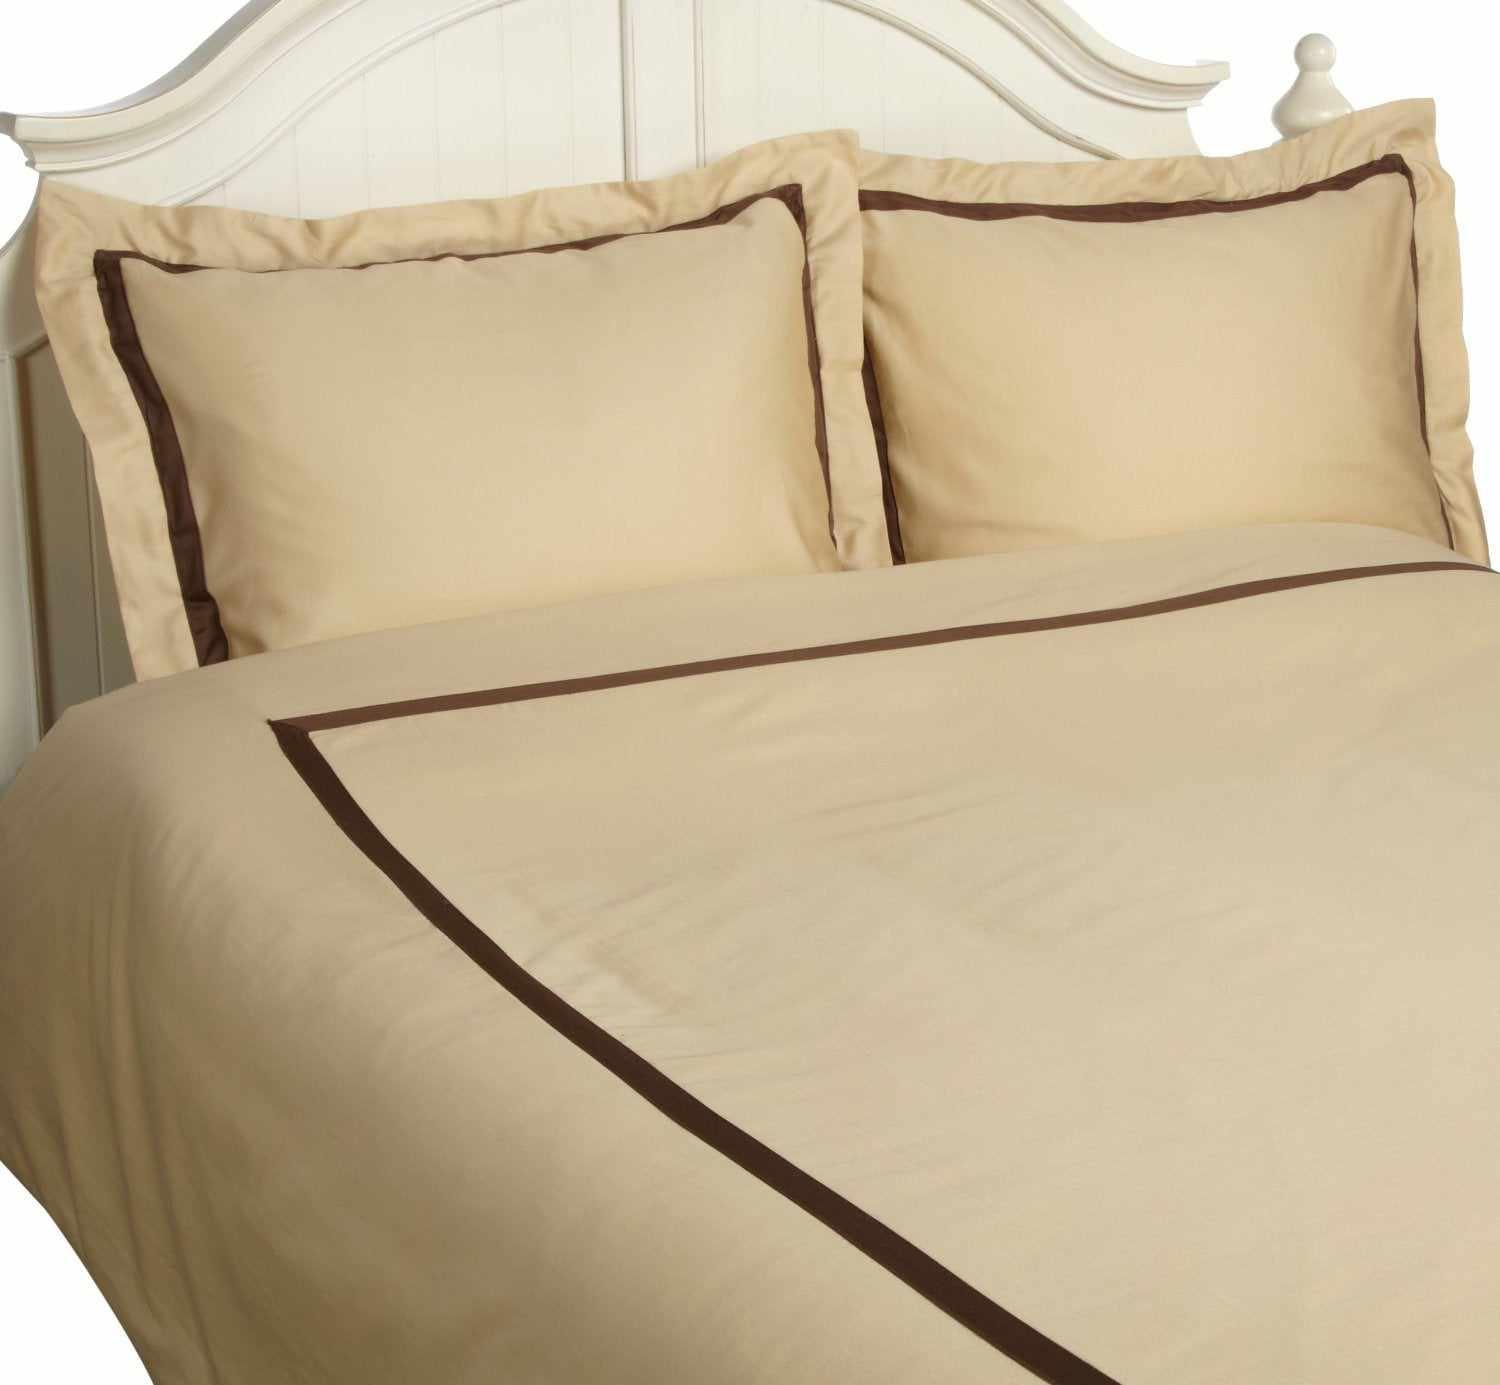  Superior Hotel Applique Stripe Egyptian Cotton Duvet Cover Set - Honey/Mocha